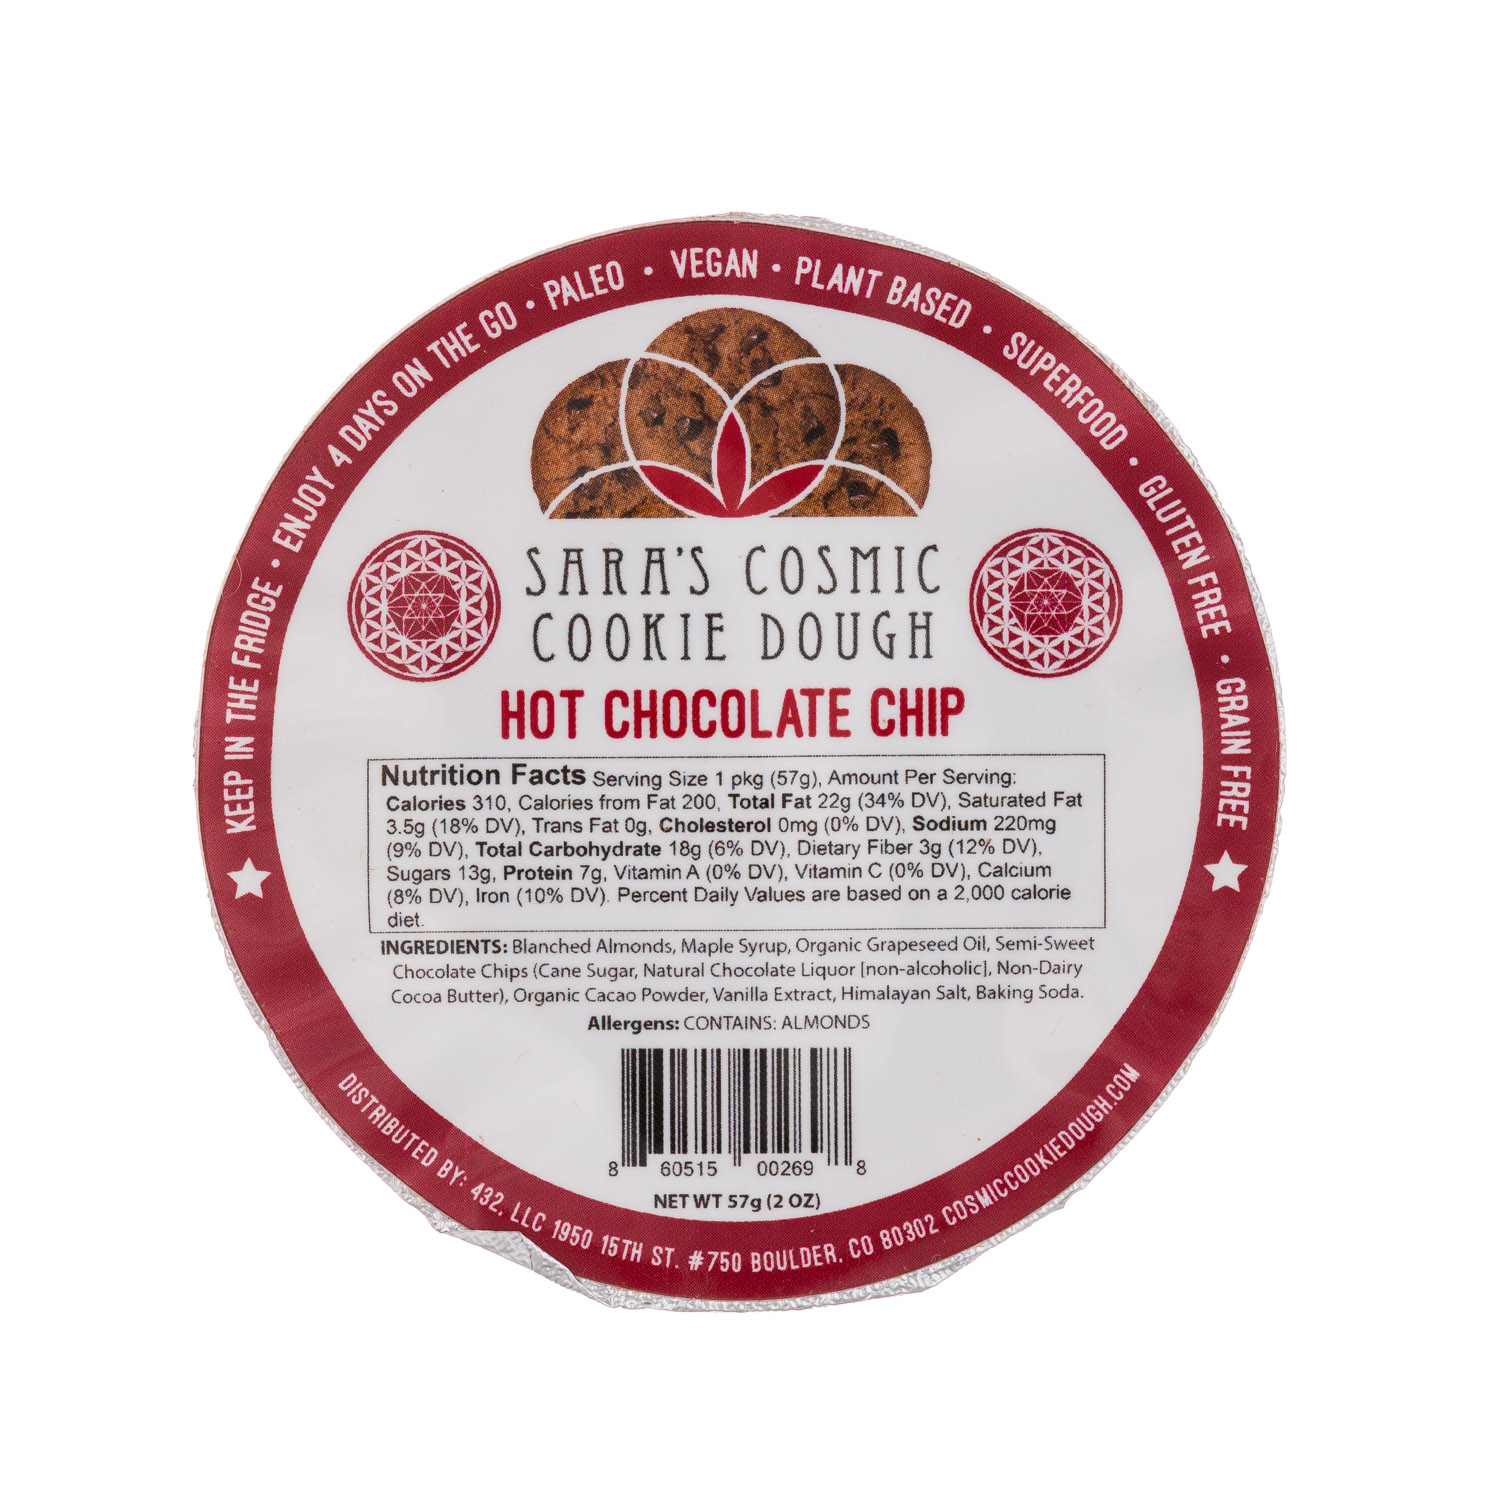 Hot Chocolate Chip